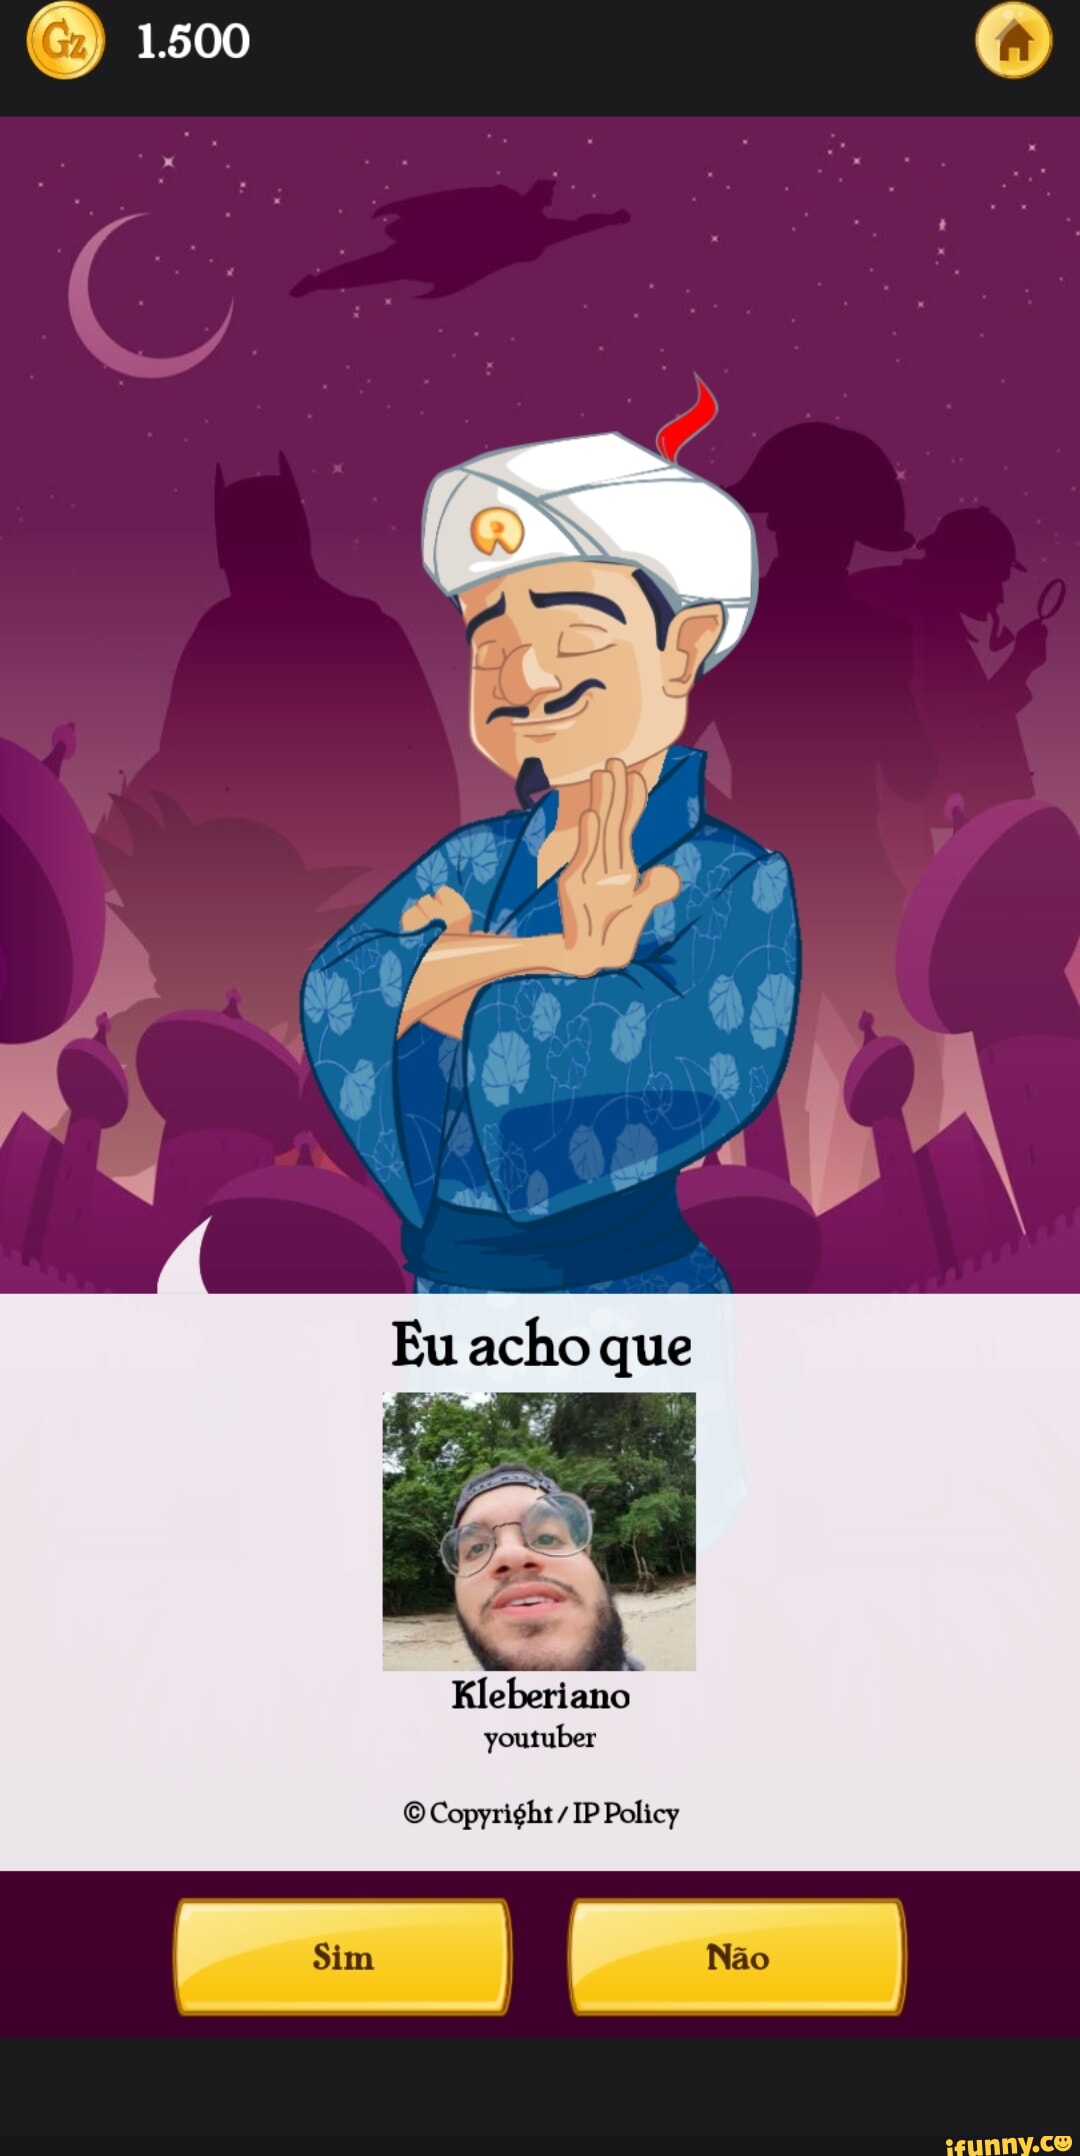 Igiobleachbrásil memes. Best Collection of funny Igiobleachbrásil pictures  on iFunny Brazil